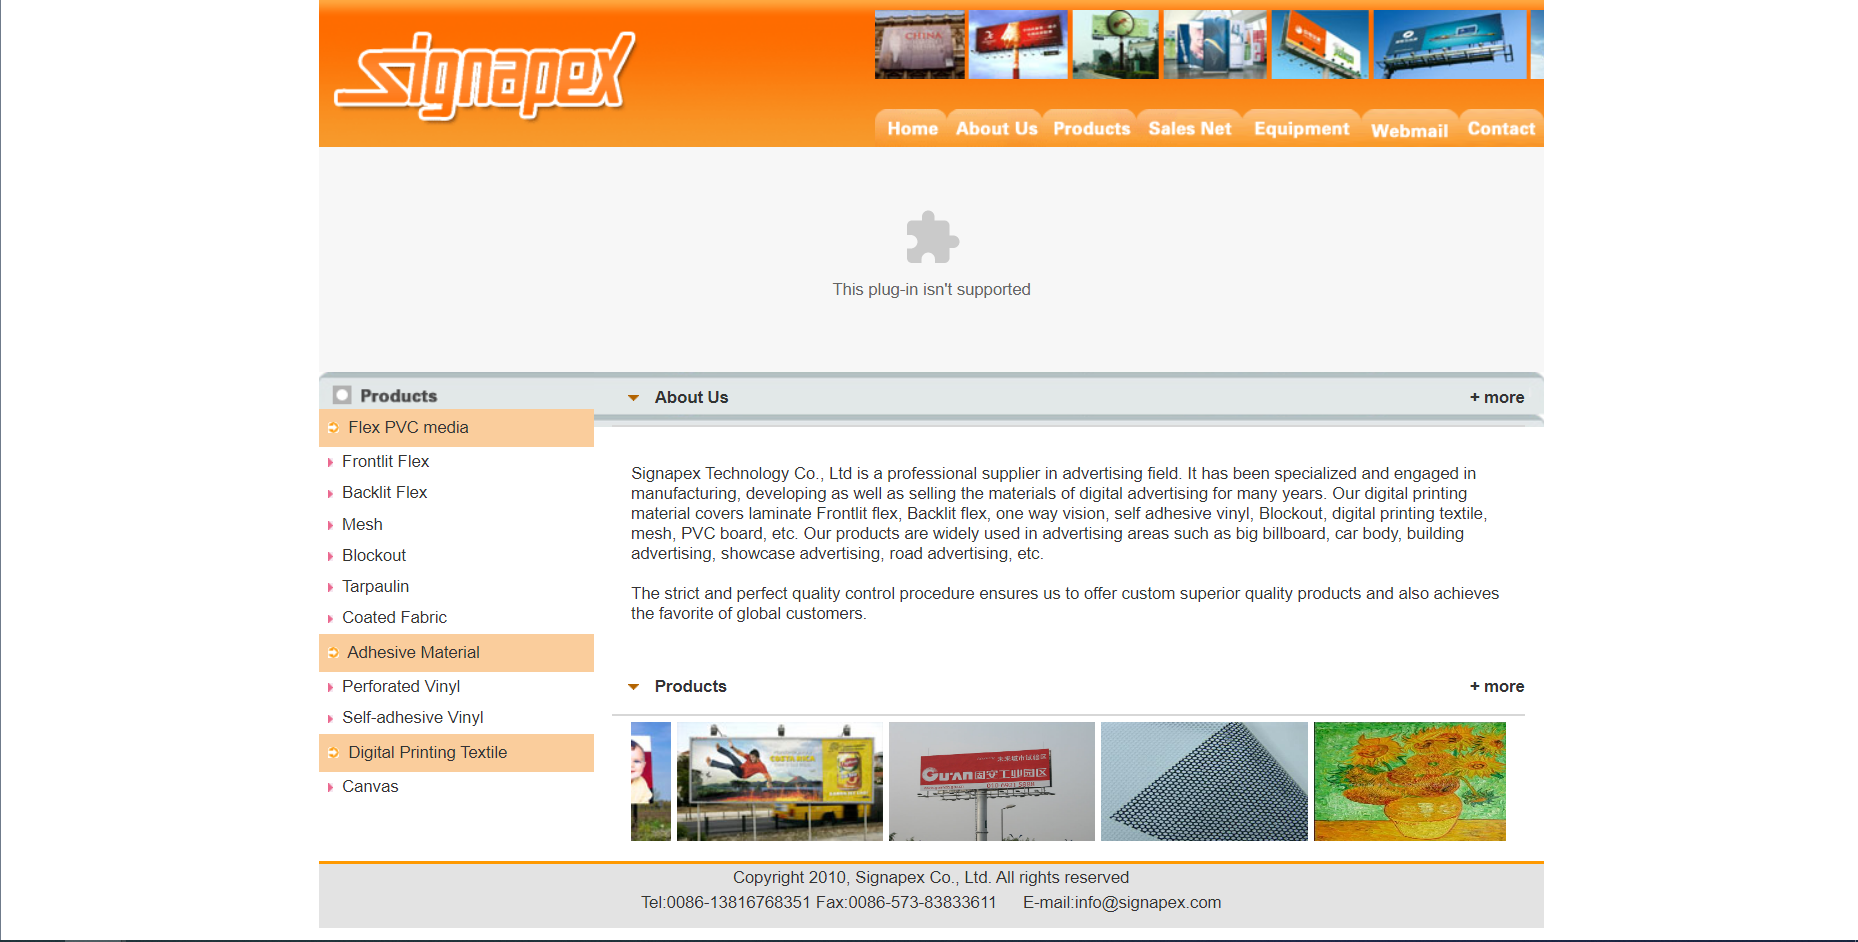 Signapex Technology Co, Ltd